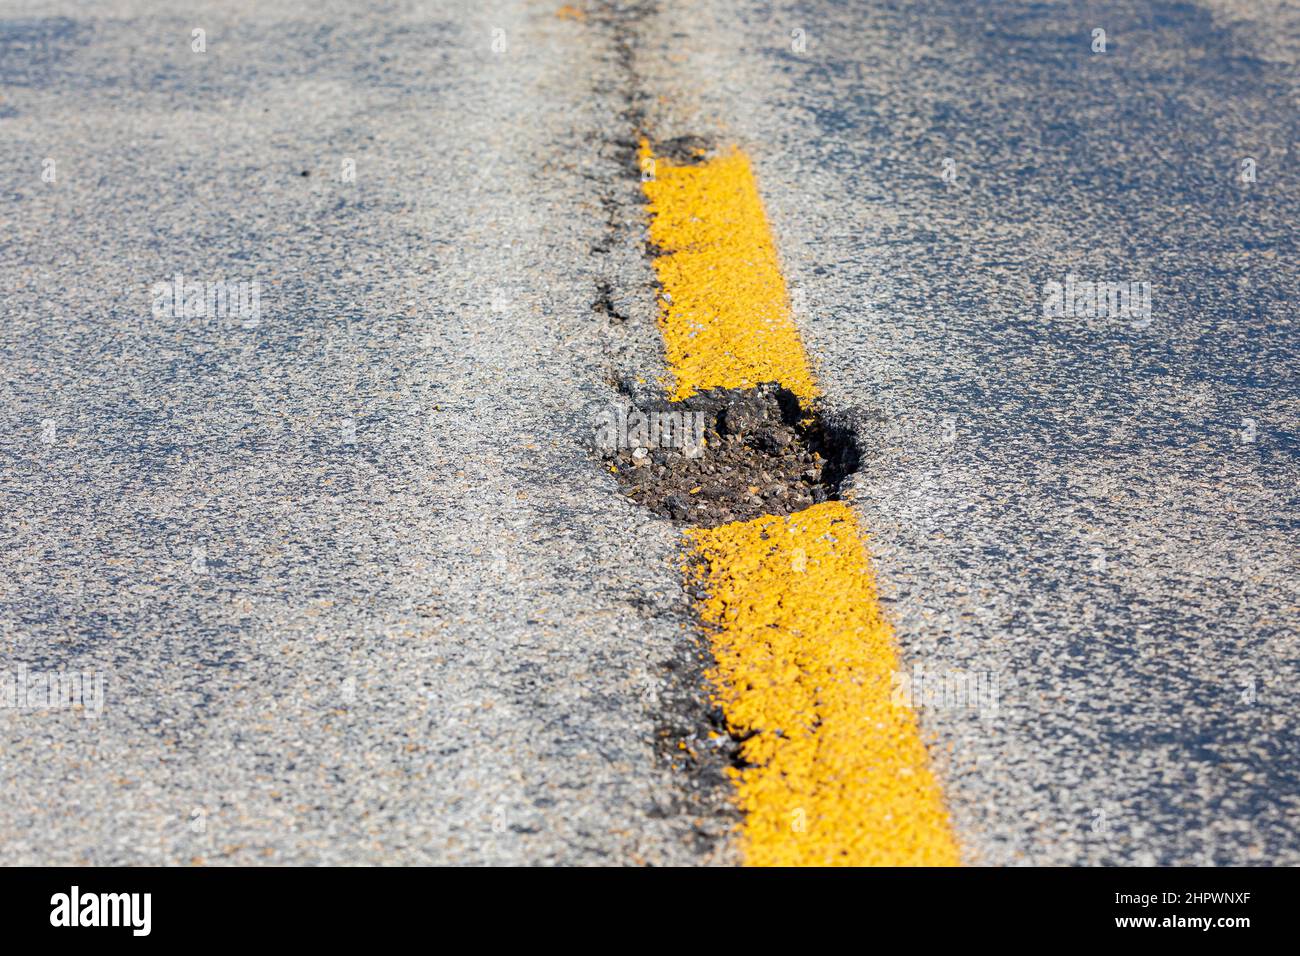 Closeup of pothole, chuckhole, in asphalt pavement road. Street repair, maintenance and damage concept. Stock Photo